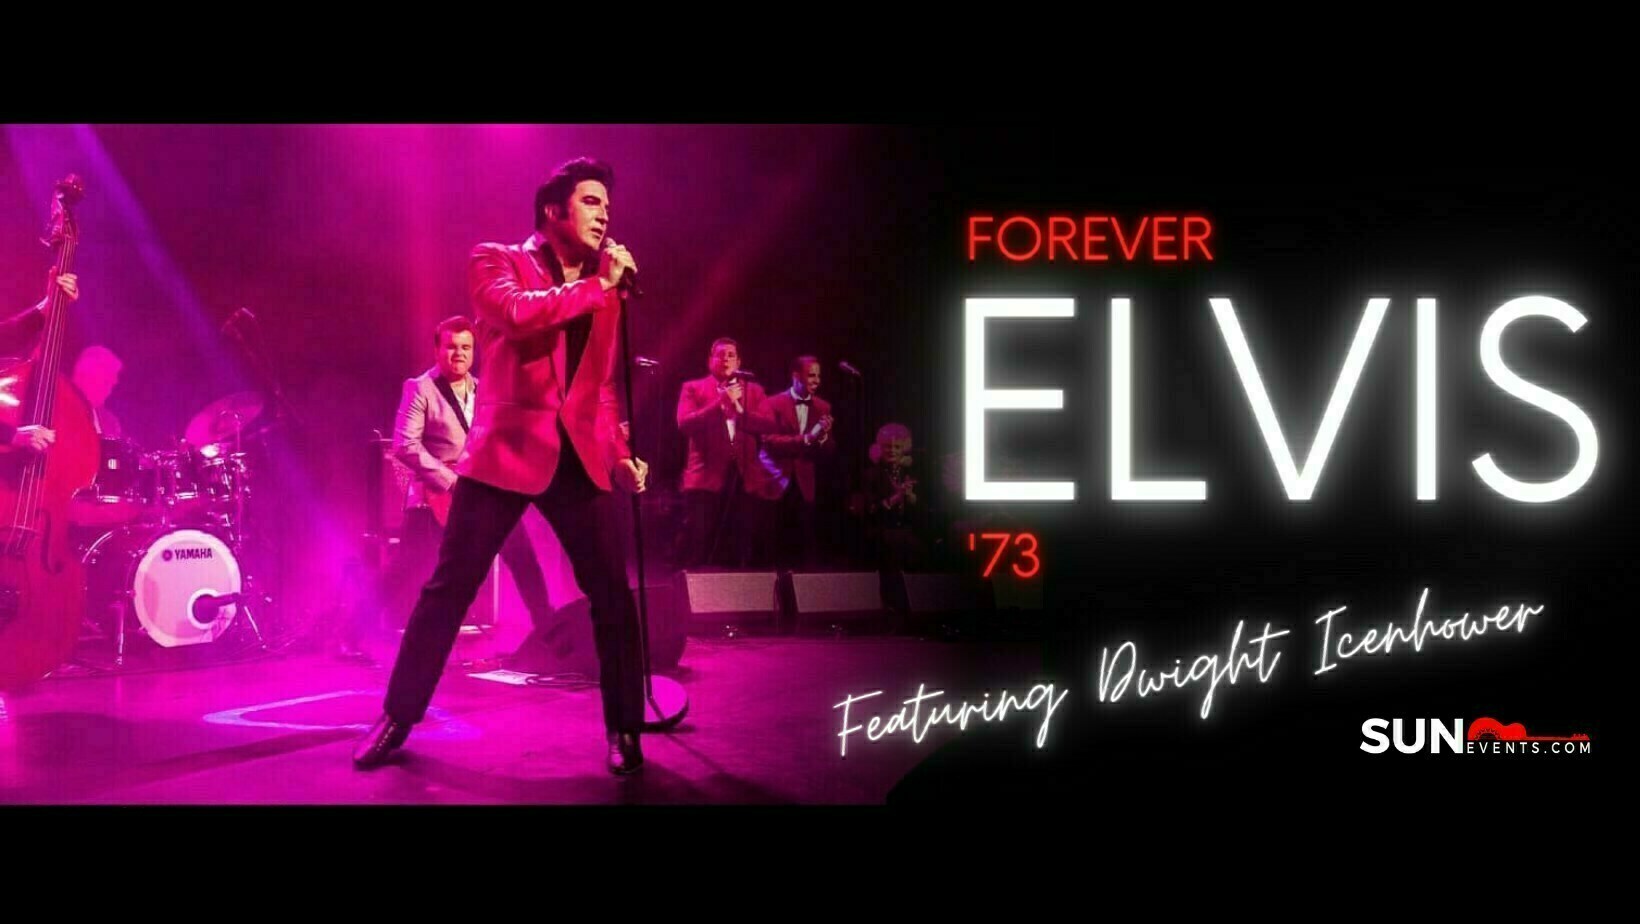 Forever Elvis '73 with Dwight Icenhower, Sarasota, Florida, United States